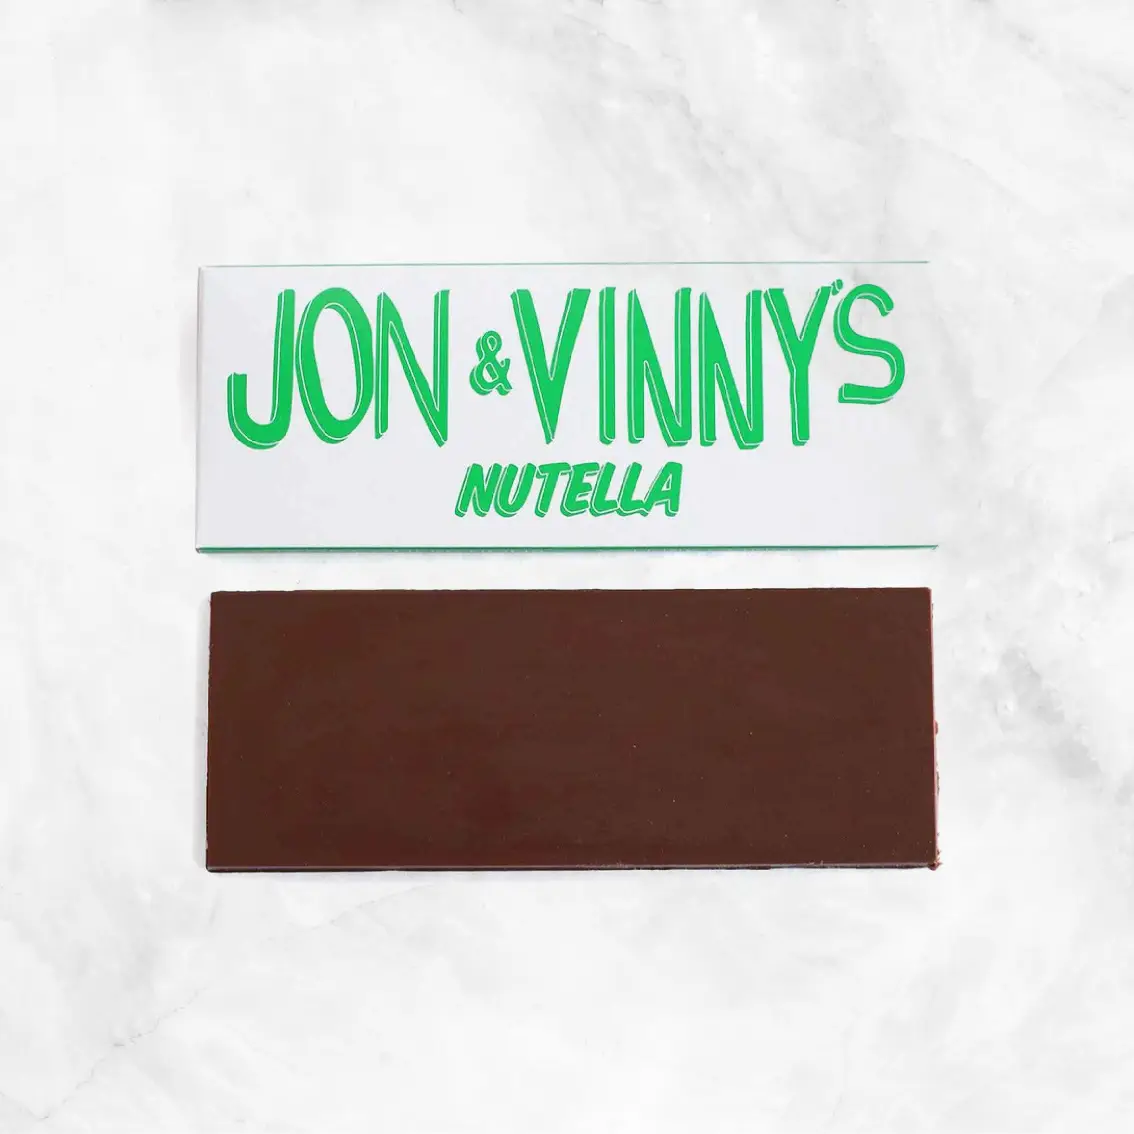 Jon & Vinny's Nutella Delivery